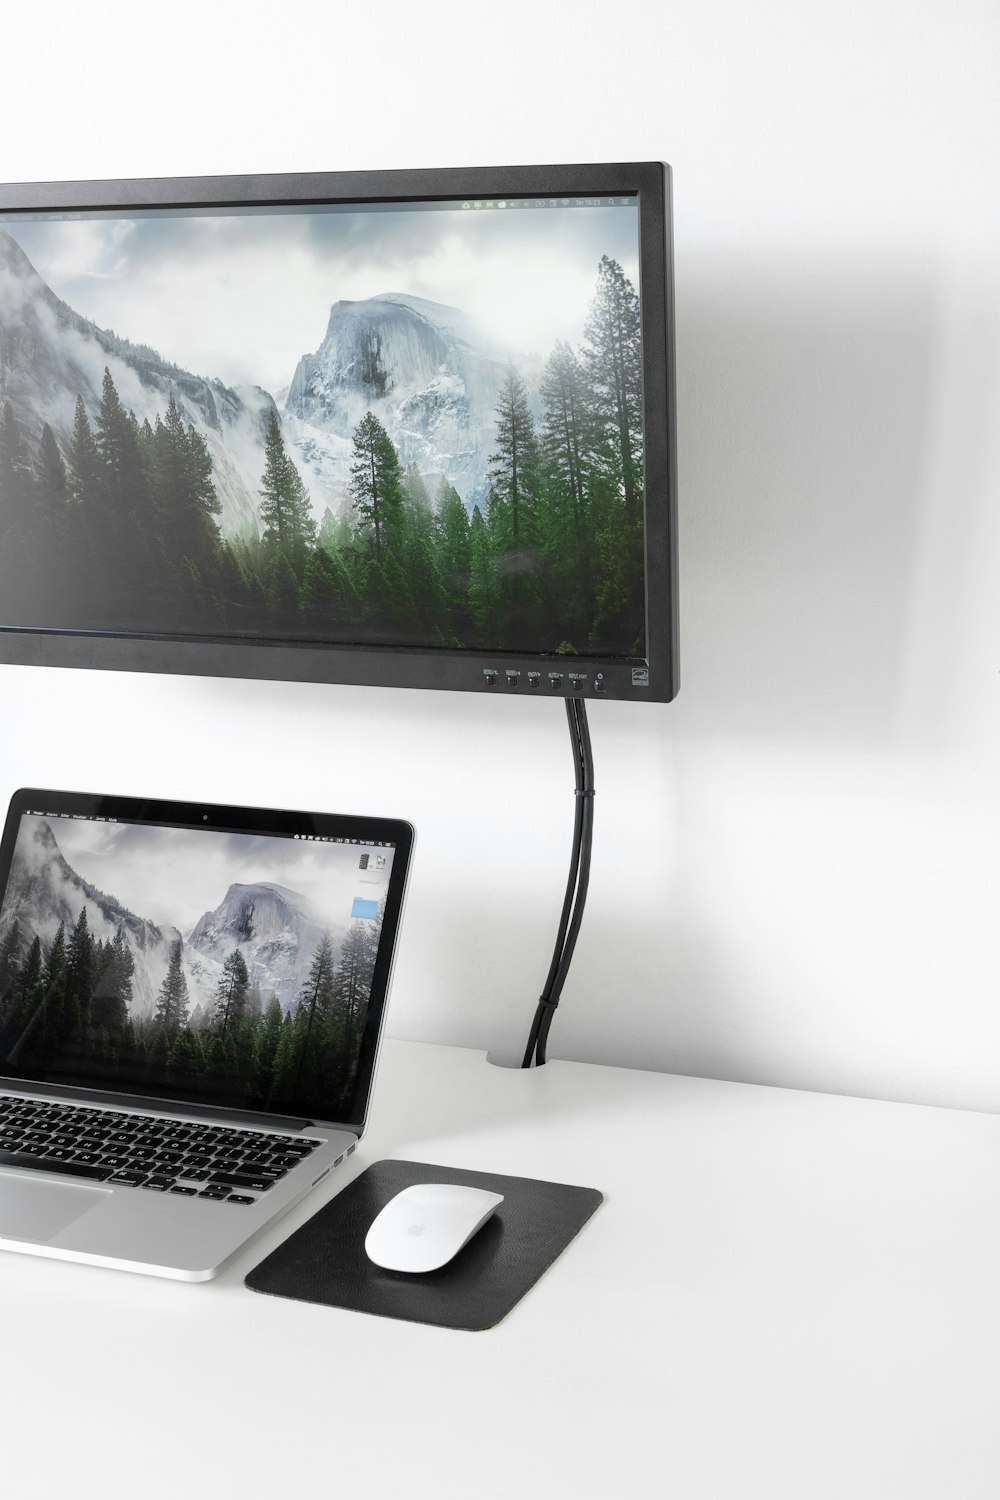 MacBook Pro under black flat screen computer monitor